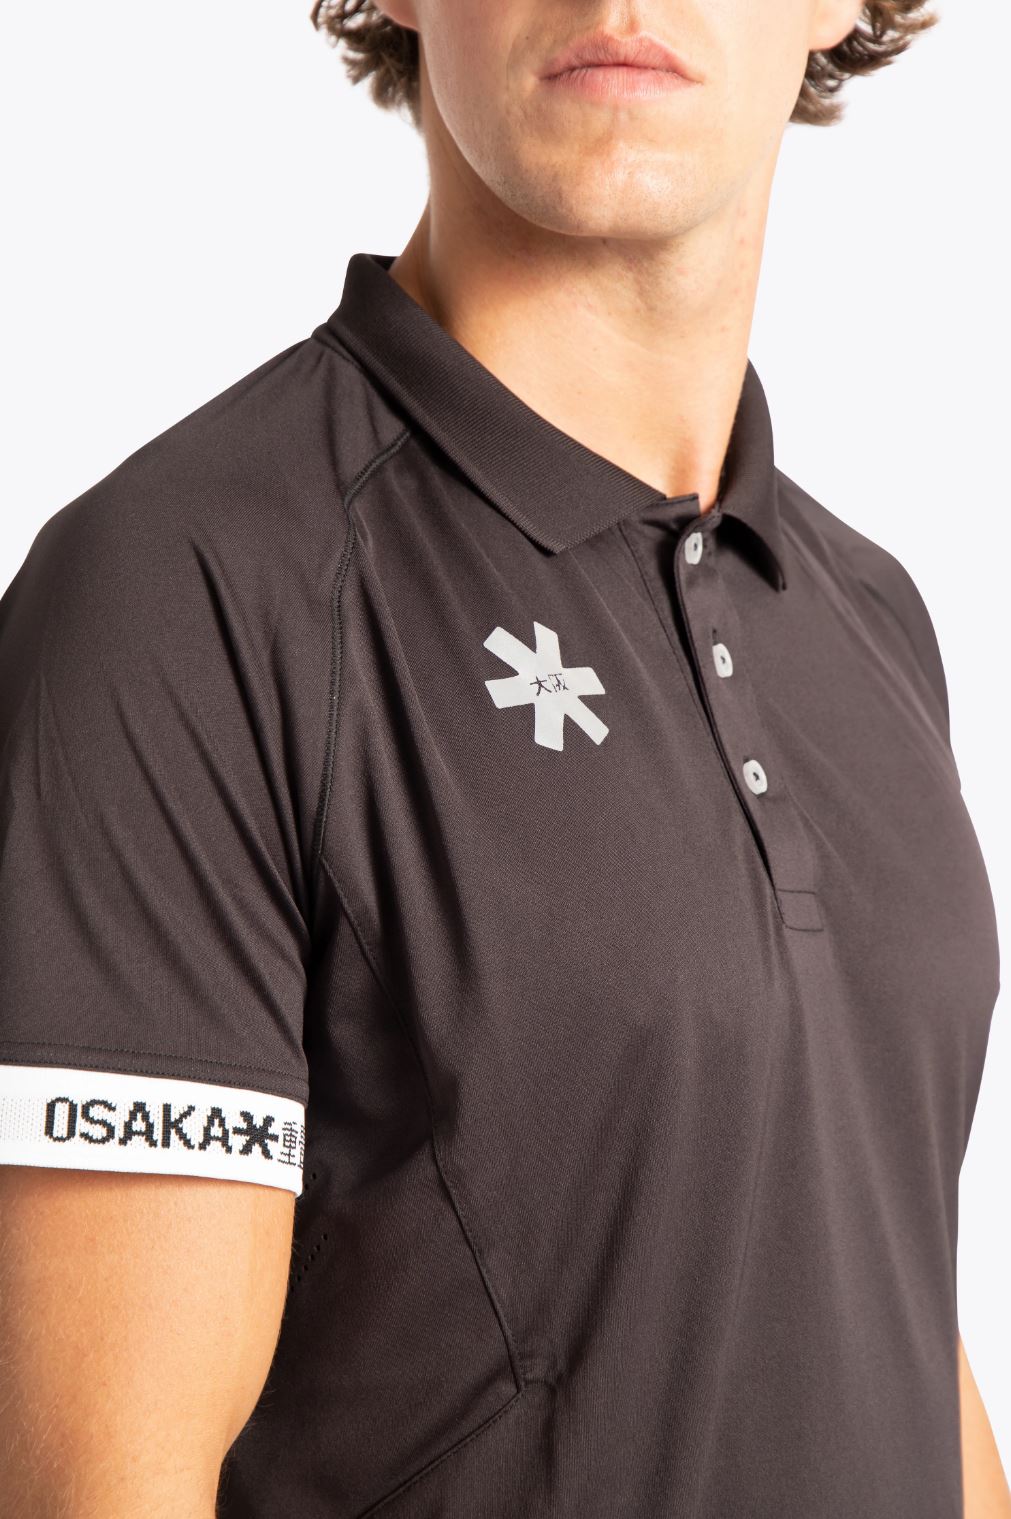 Osaka Men's Polo Jersey (Black)